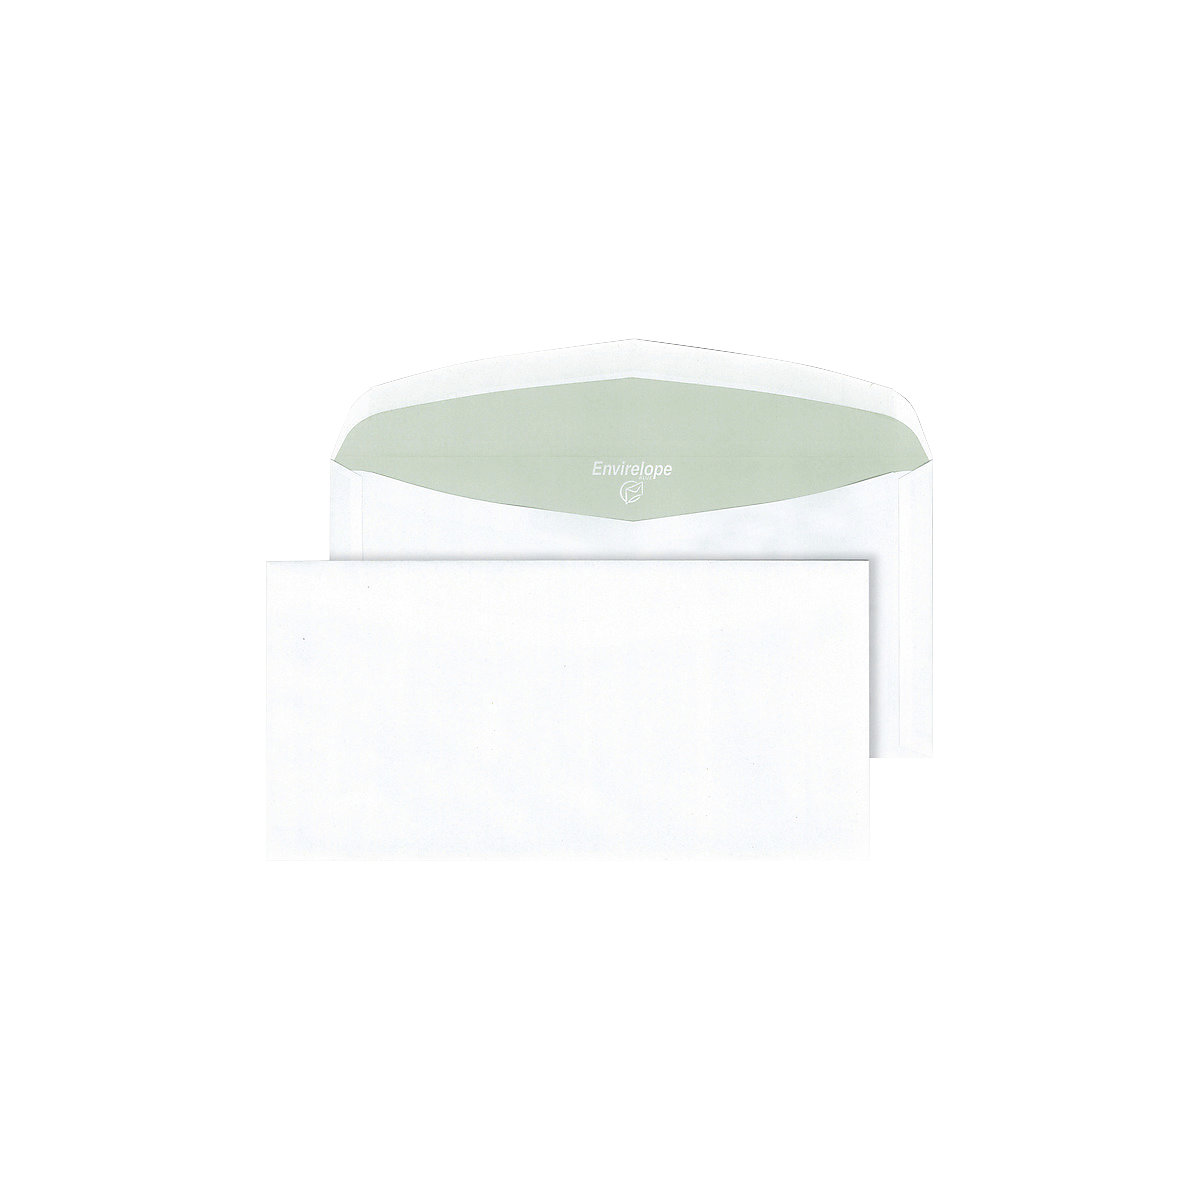 Enveloppes Envirelope® – terra, blanc, format C6 / C5, lot de 1000-1